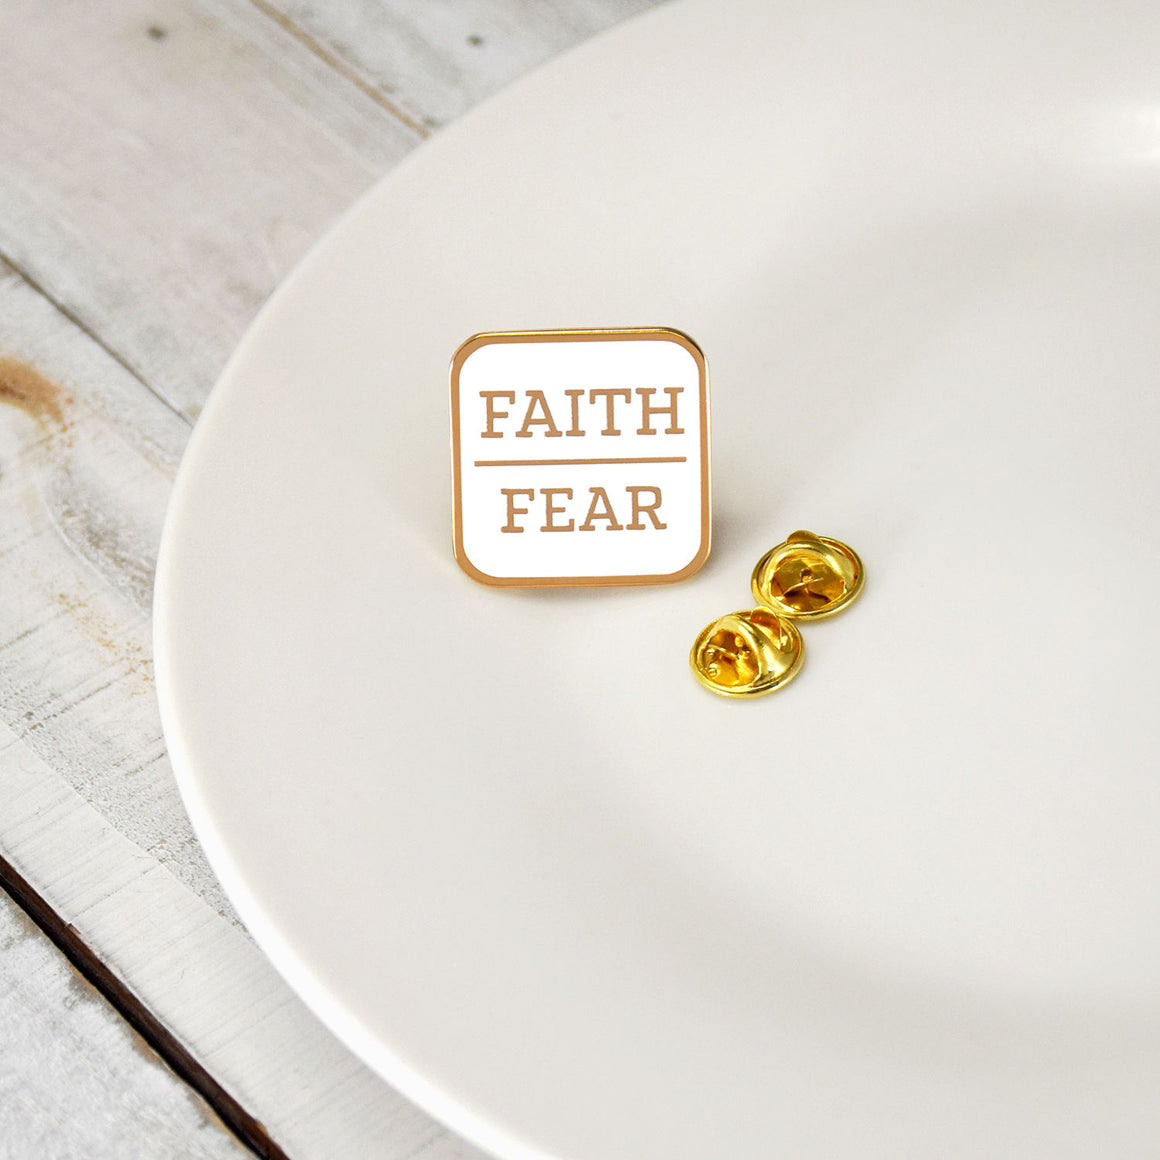 Lifebeats Faith over Fear Enamel Pin